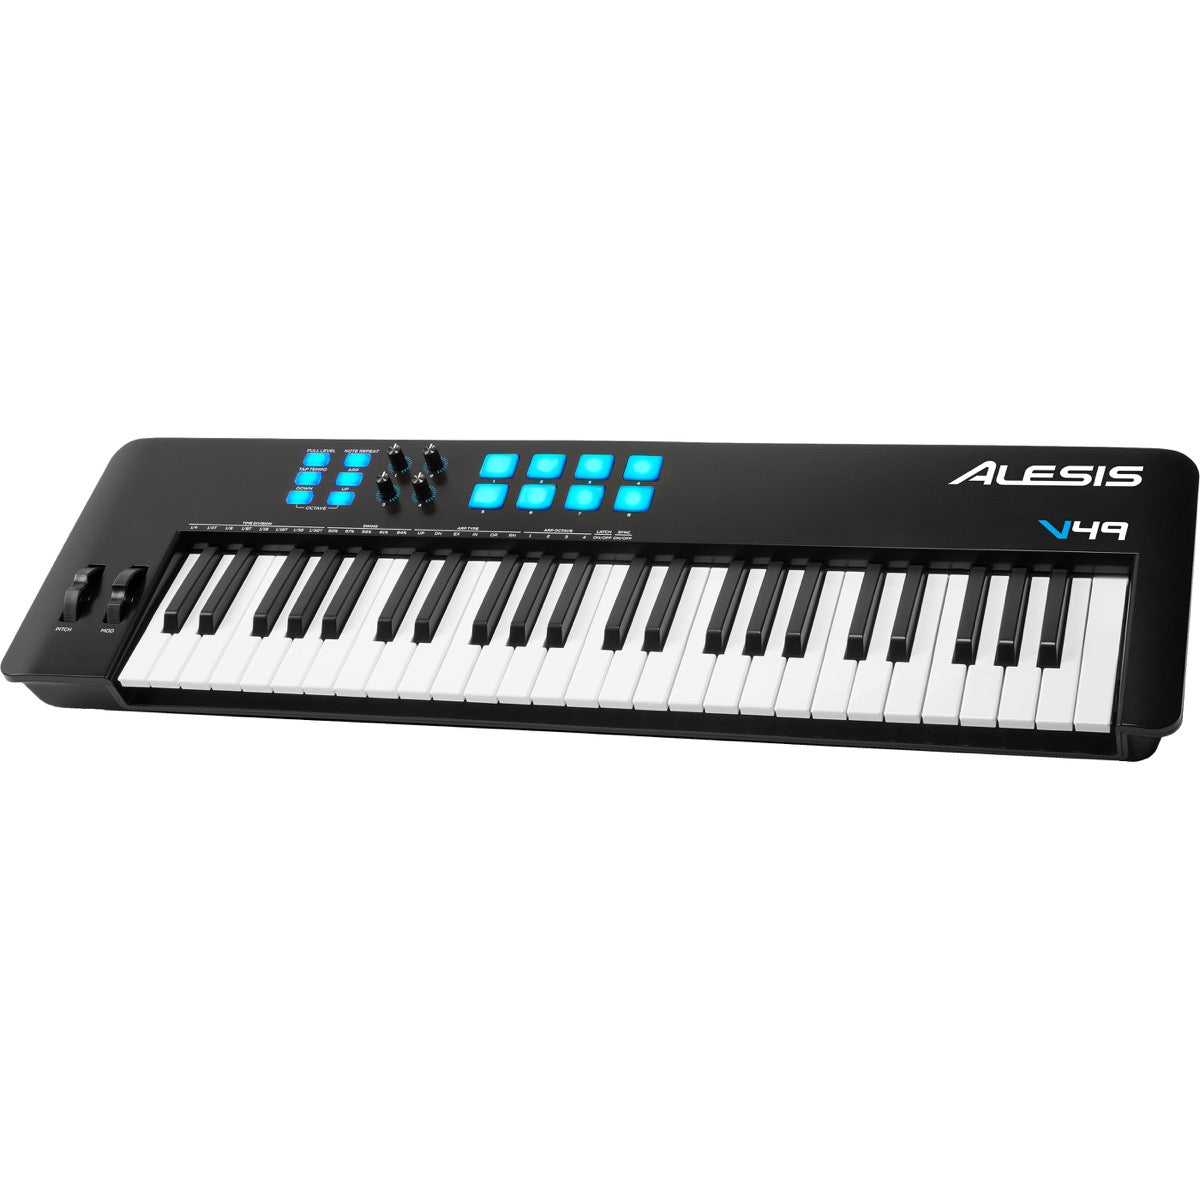 Alesis V49 MKII 49-Key USB-MIDI Keyboard Controller View 5